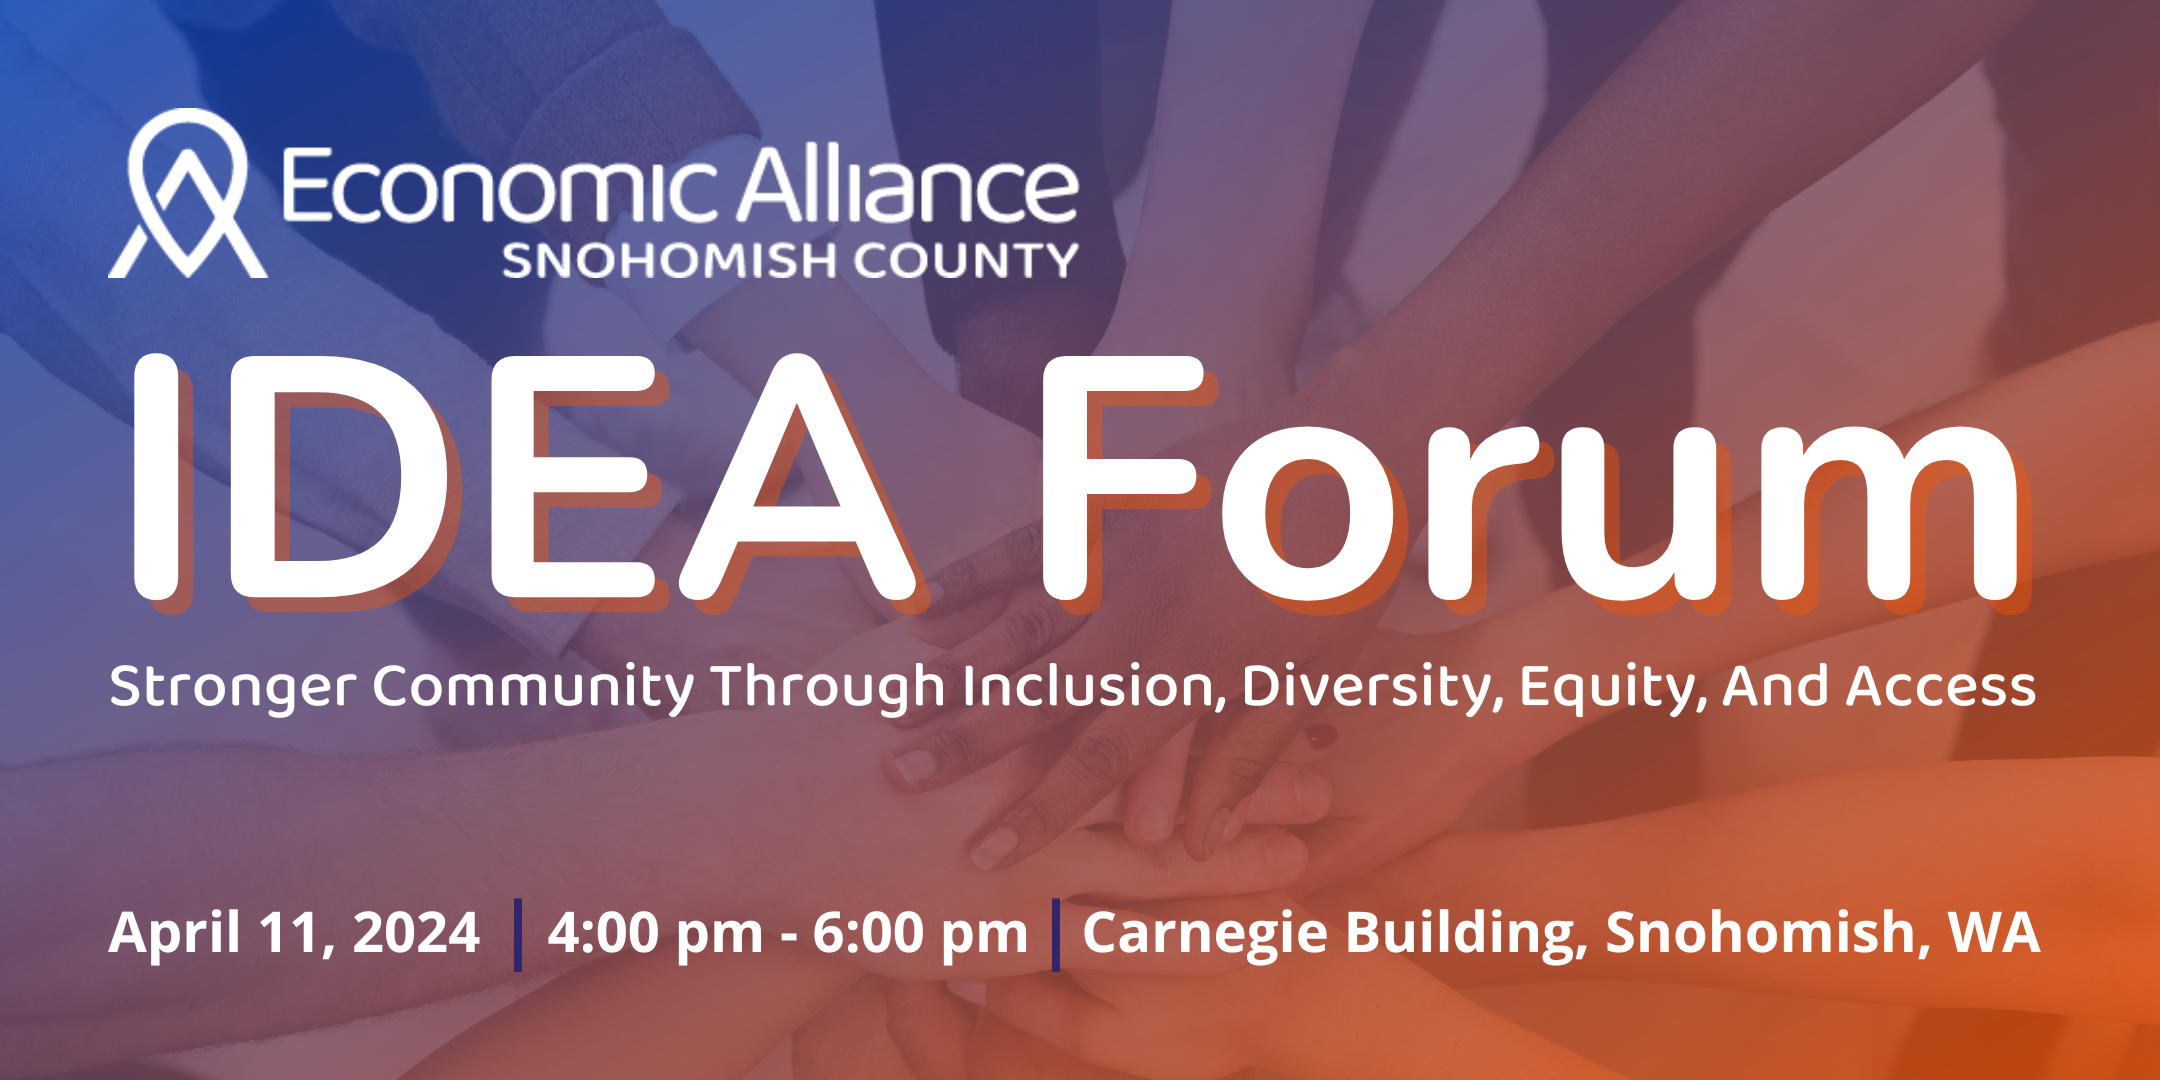 IDEA Forum (Inclusion, Diversity, Equity, Accessibility) Photo